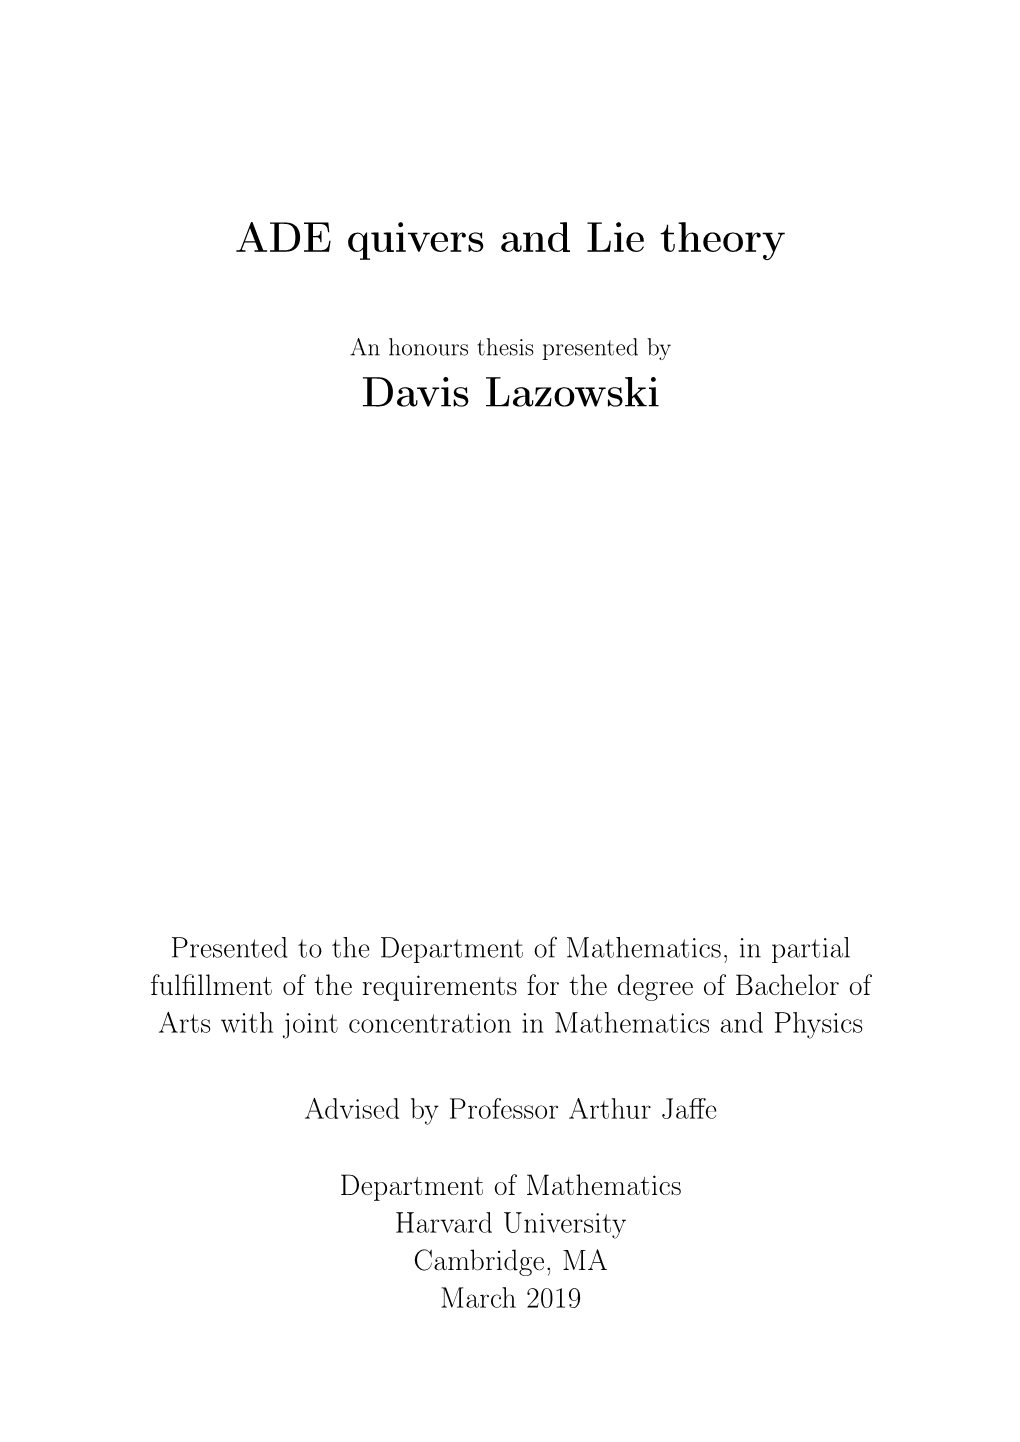 ADE Quivers and Lie Theory Davis Lazowski